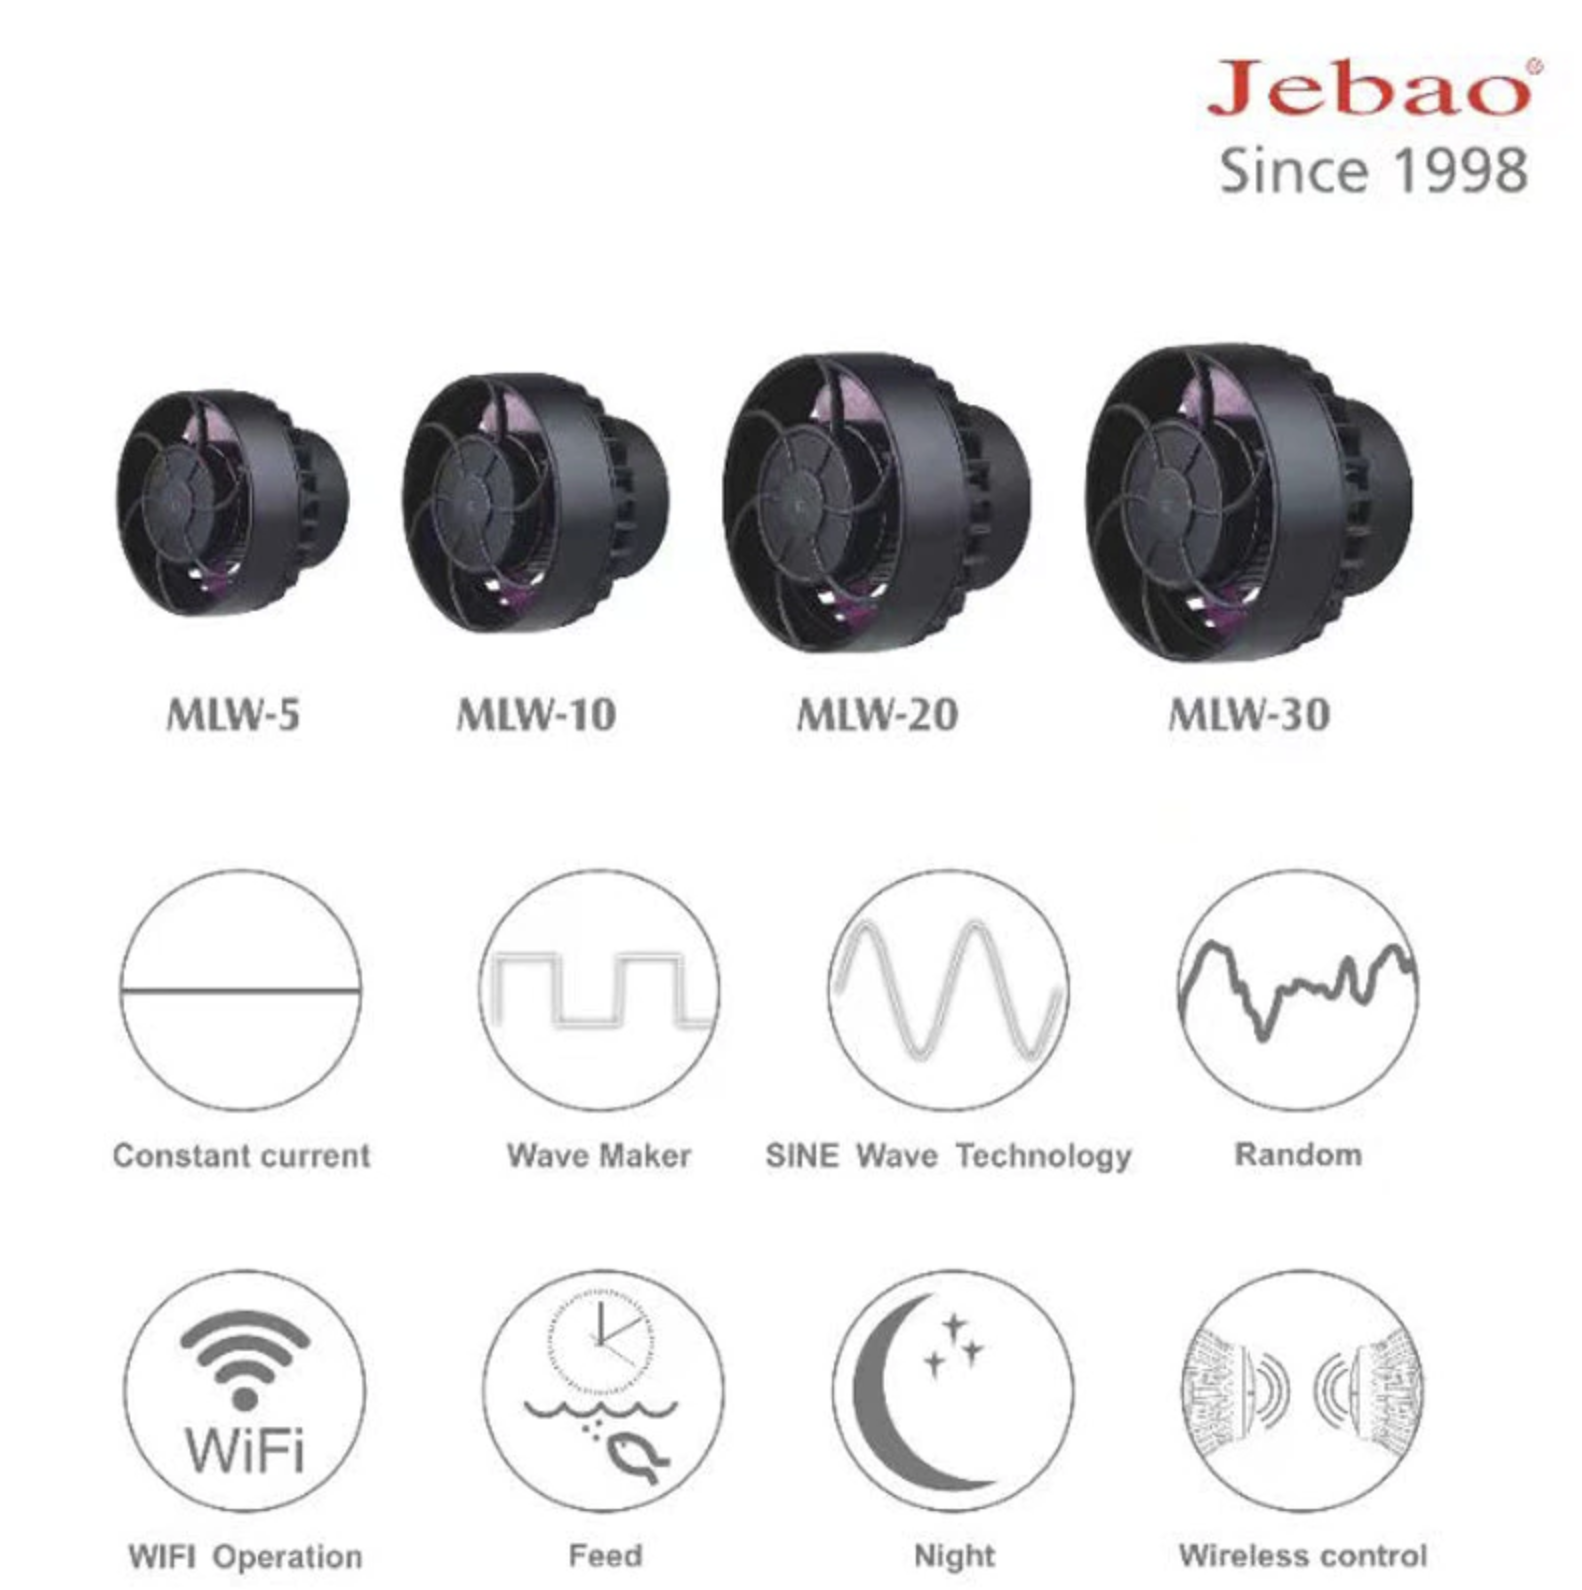 Jecod/Jebao MLW-30 Wi-Fi stromingspompen (sine wave)